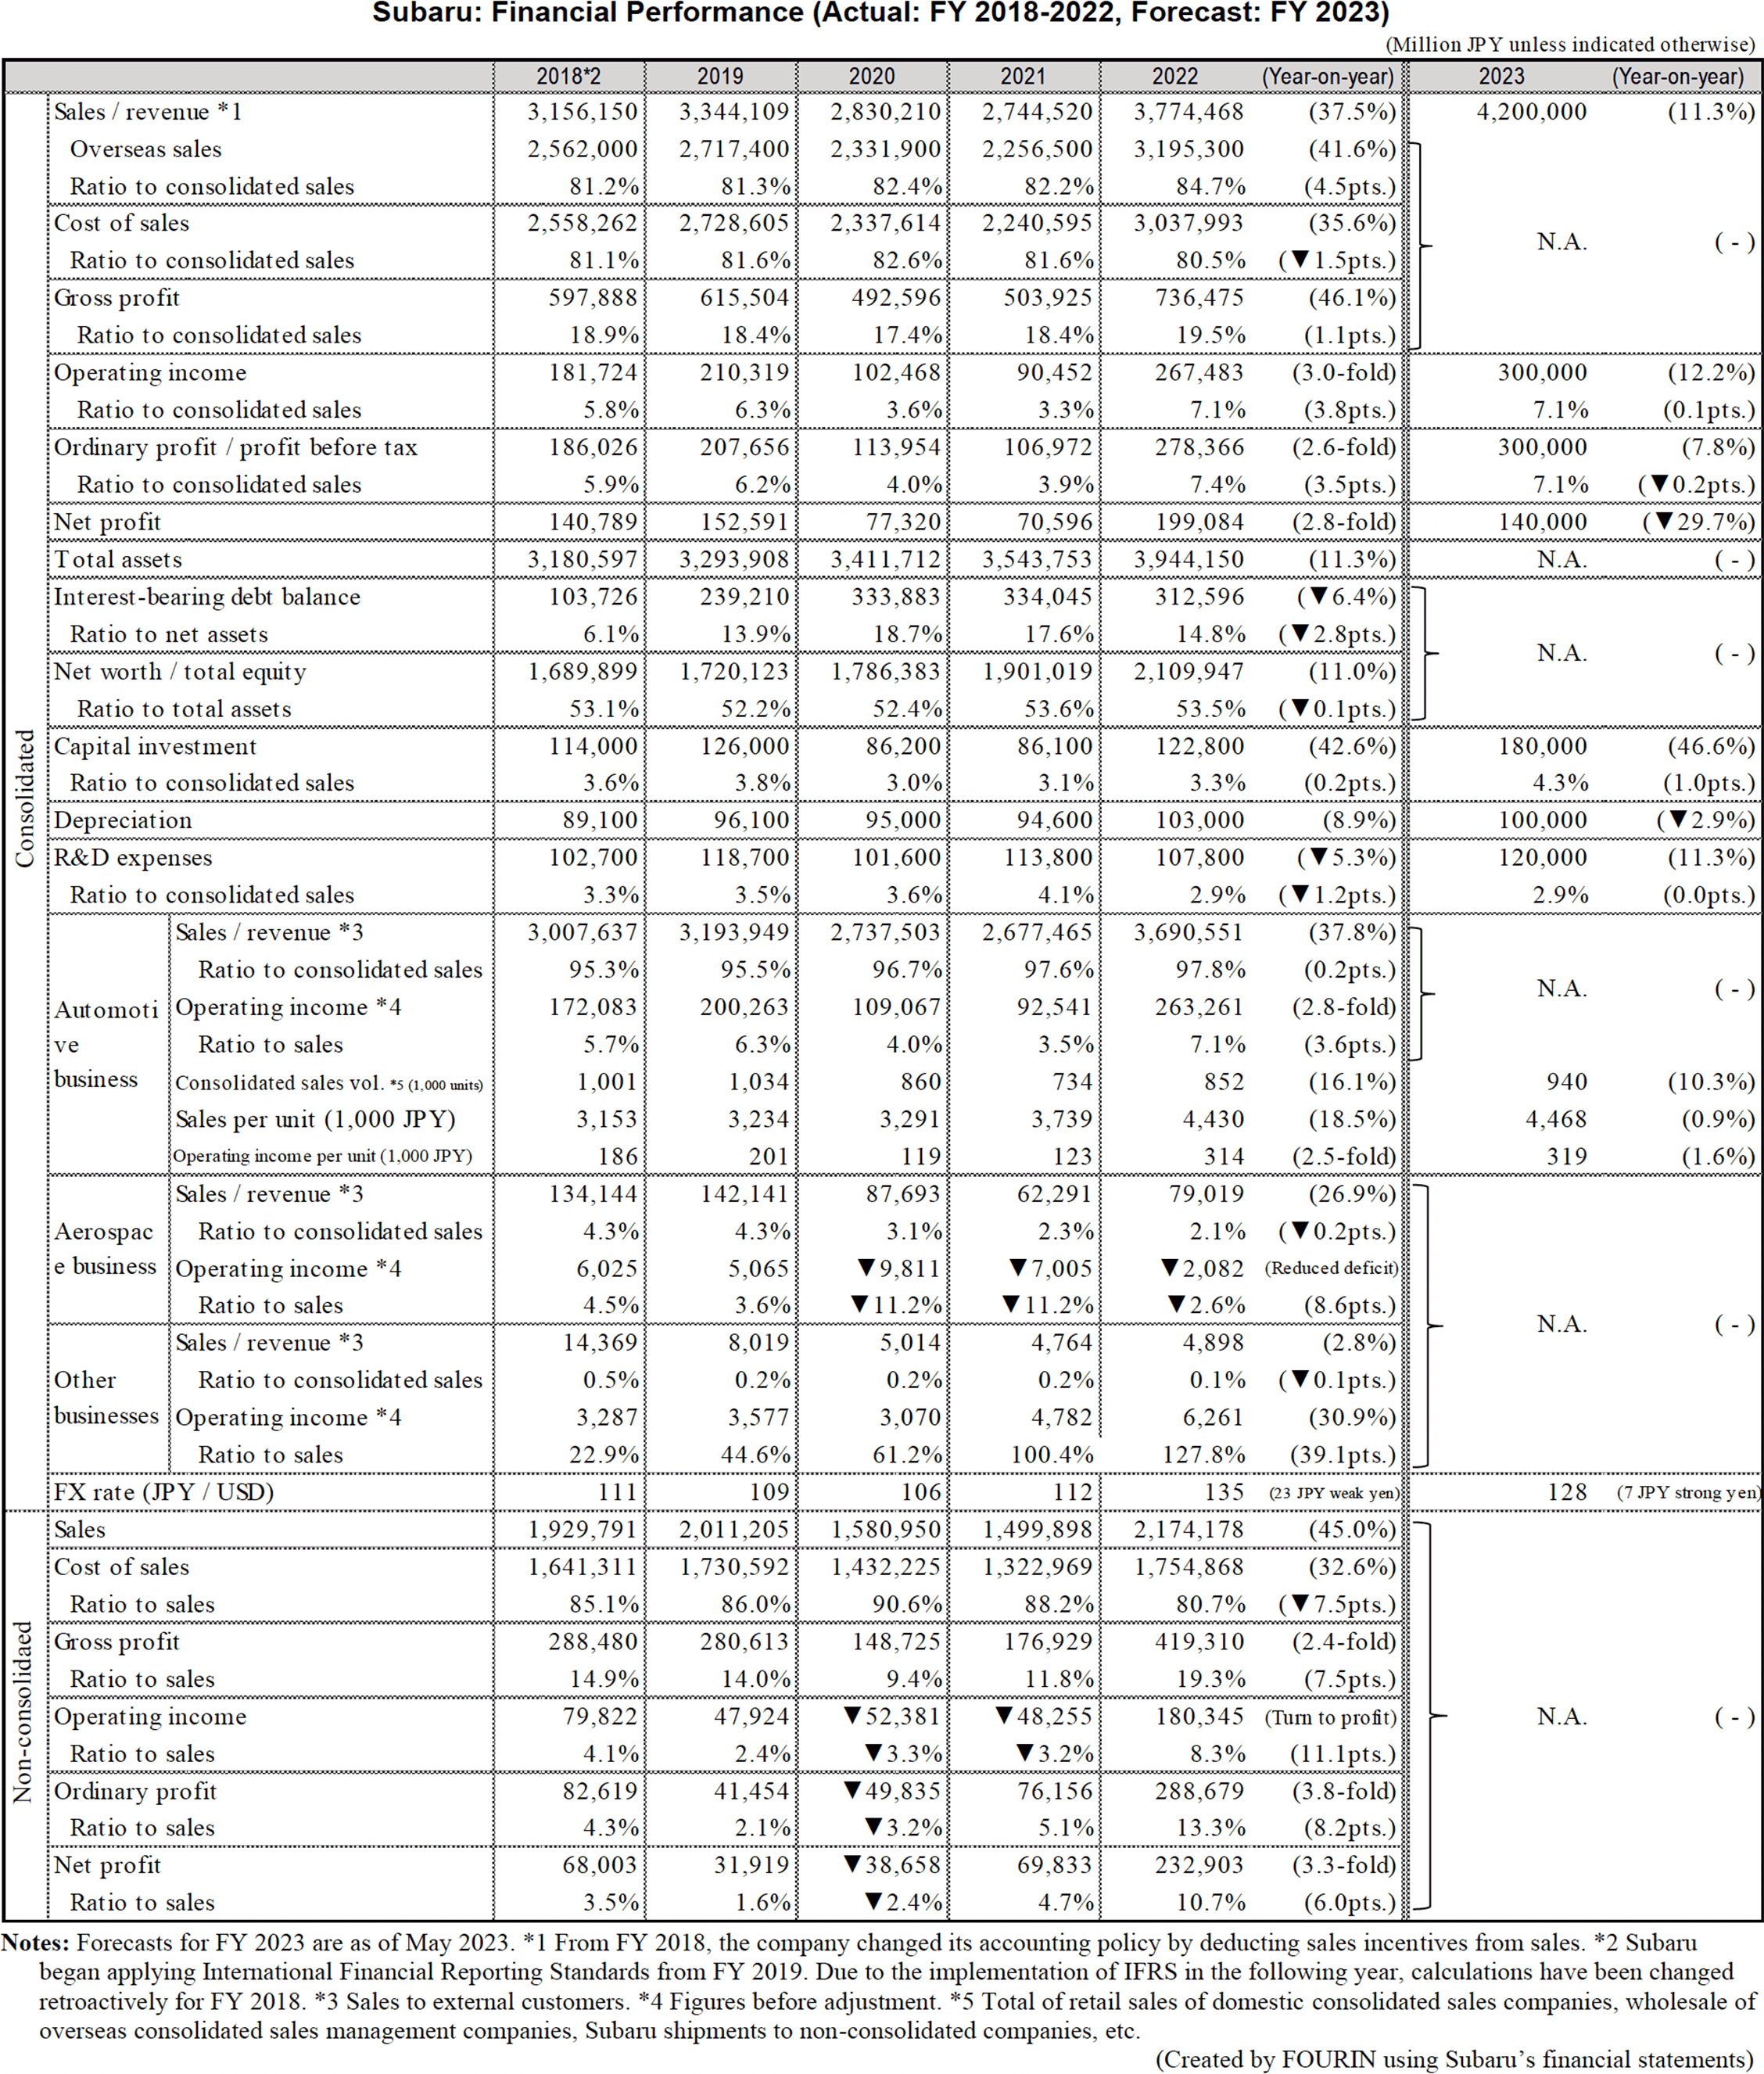 Table data: Subaru: Financial Performance (Actual: FY 2018-2022, Forecast: FY 2023)